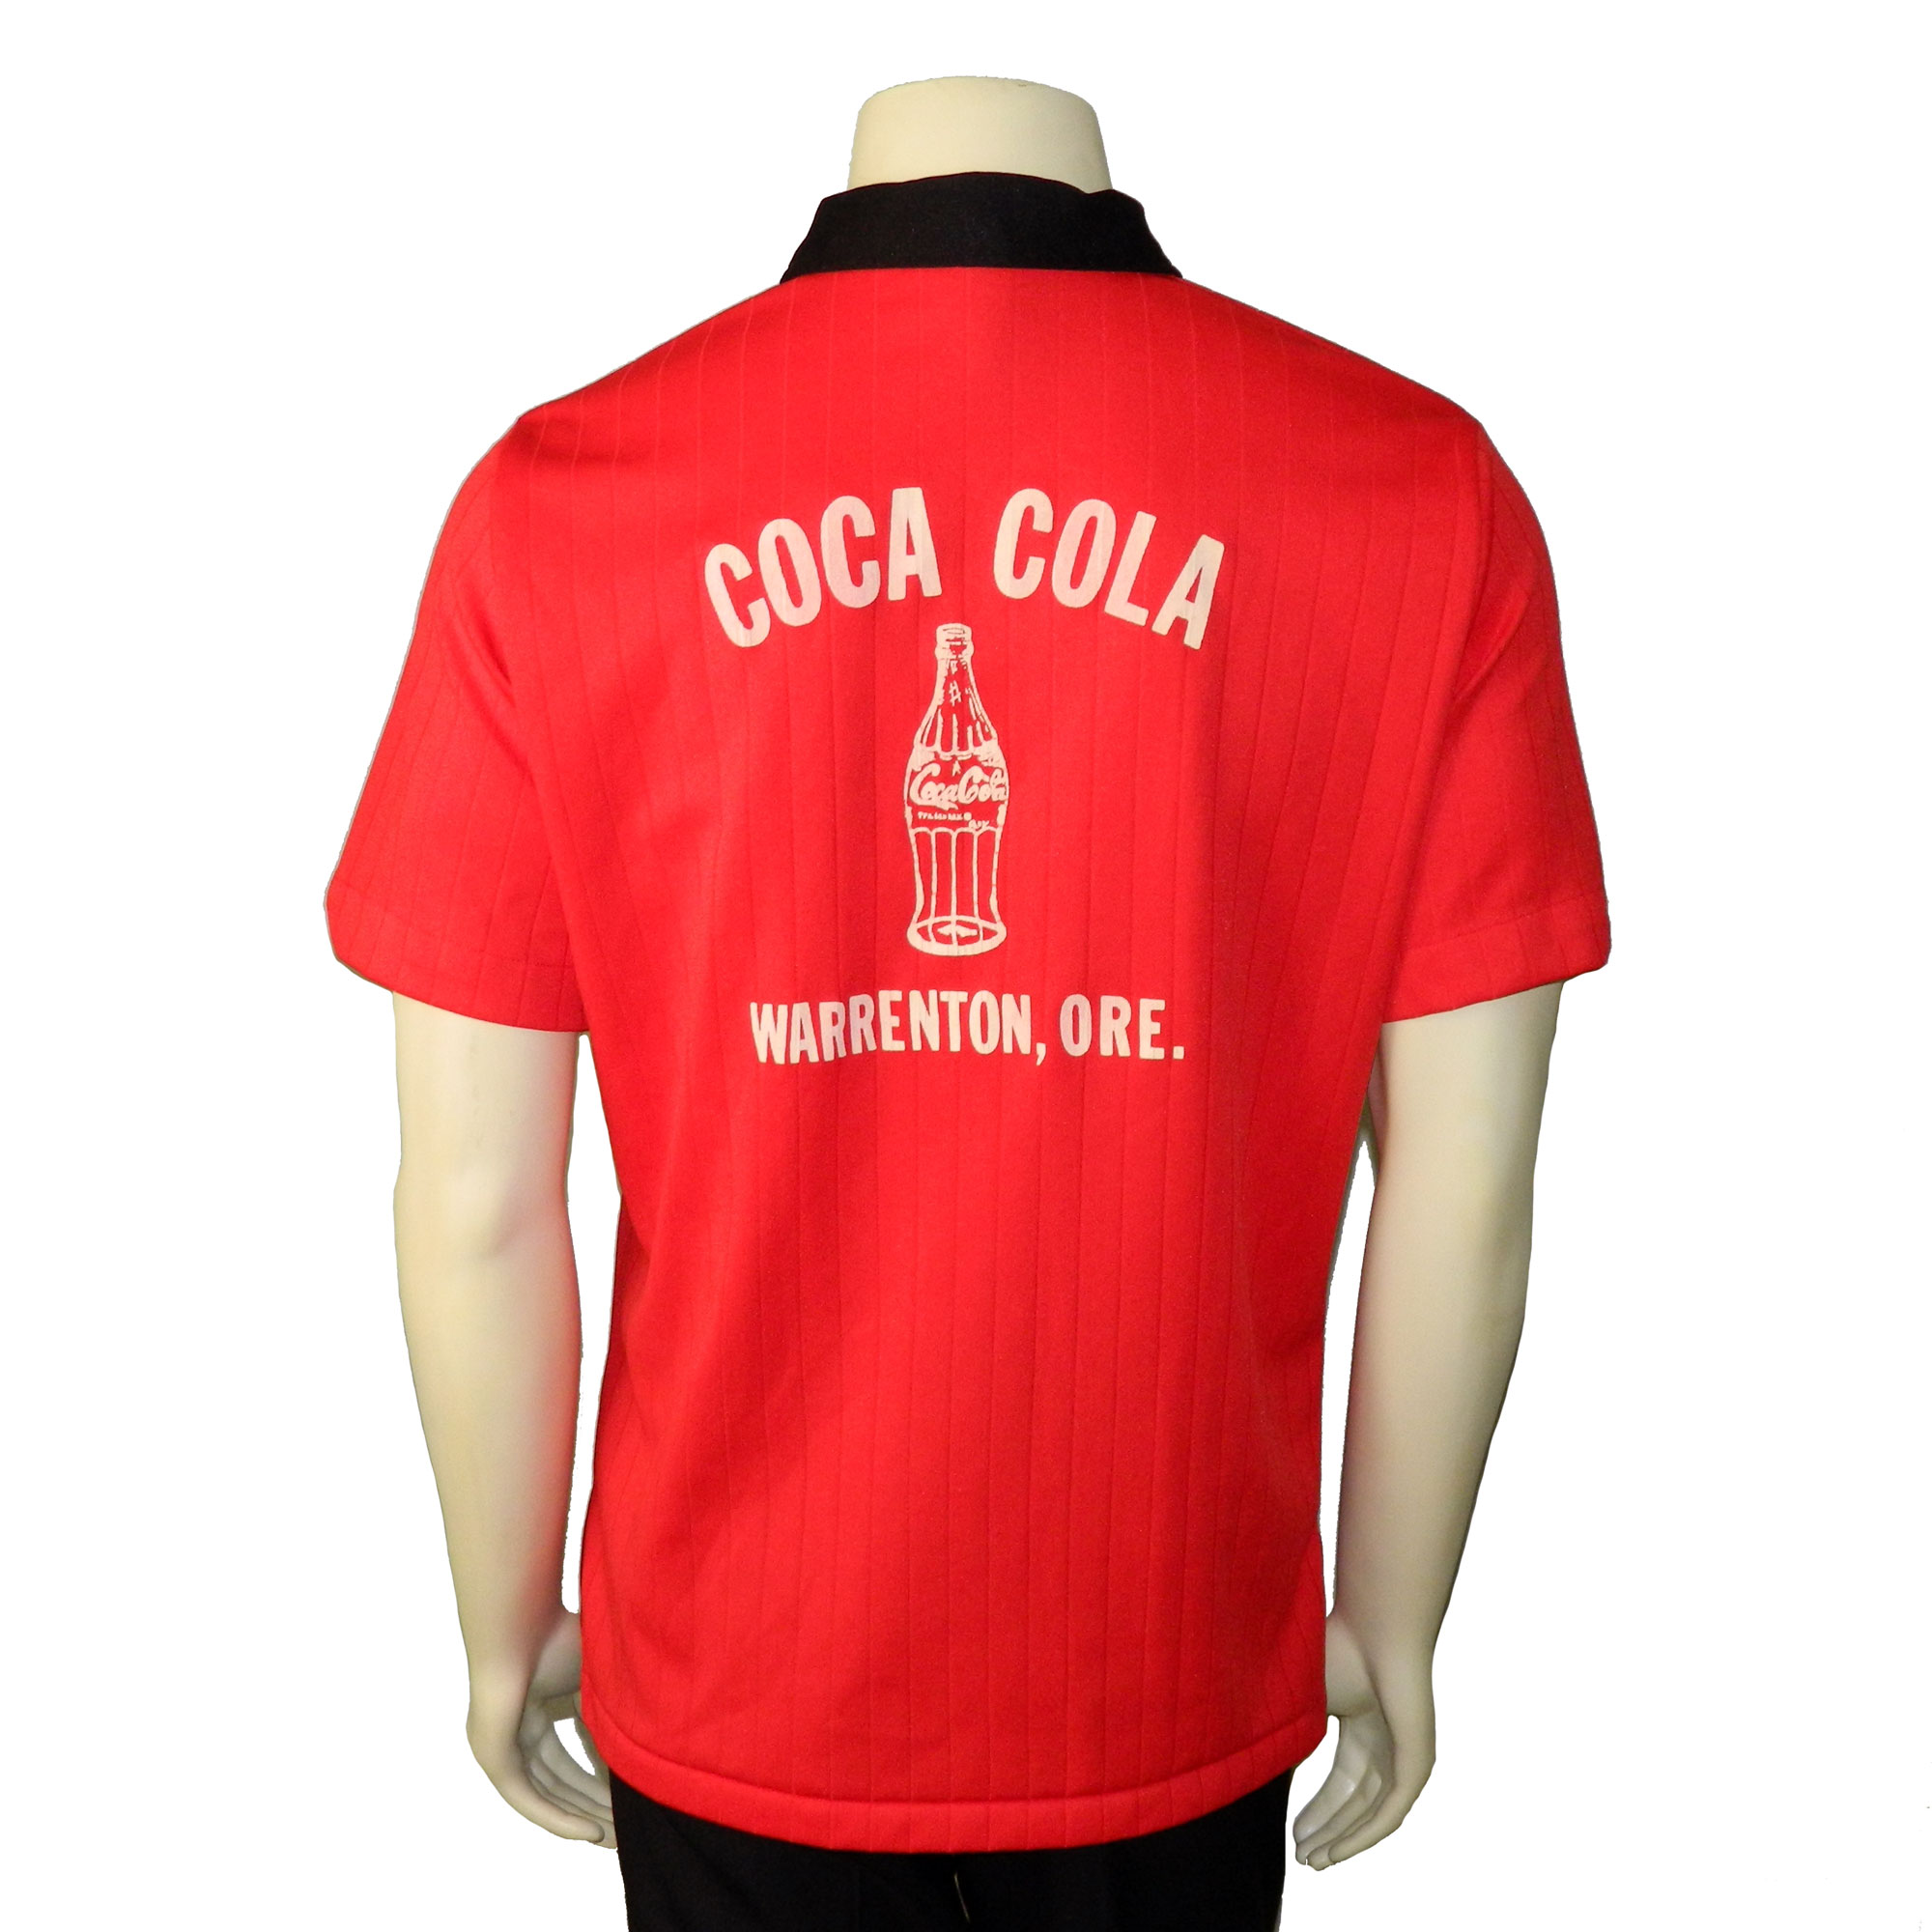 1970s Coca Cola bowling shirt